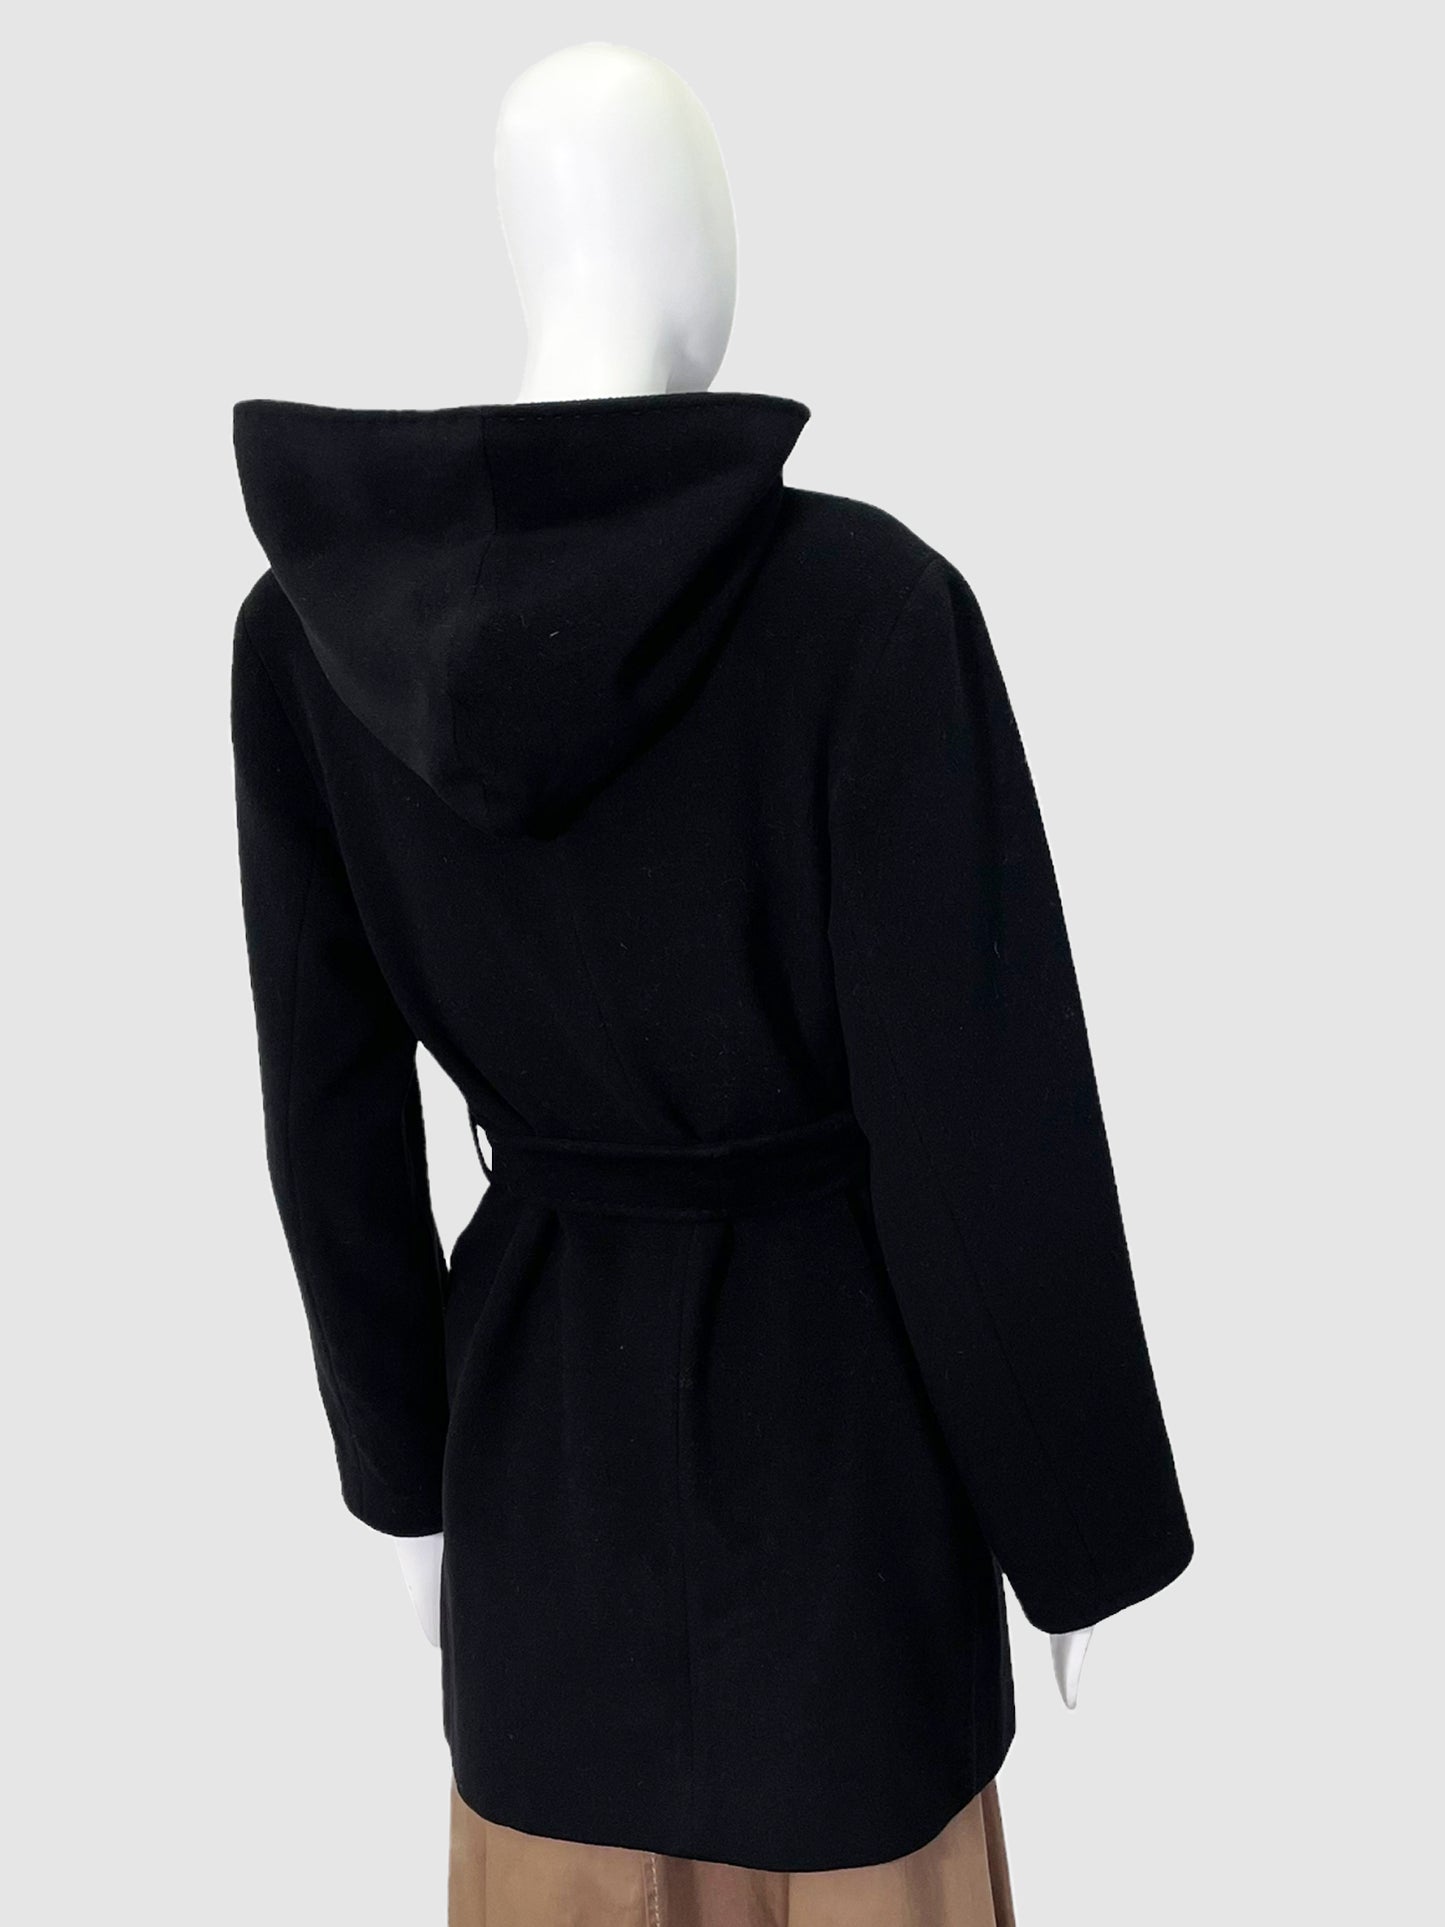 Cinzia Rocca Wool Jacket - Size S/M